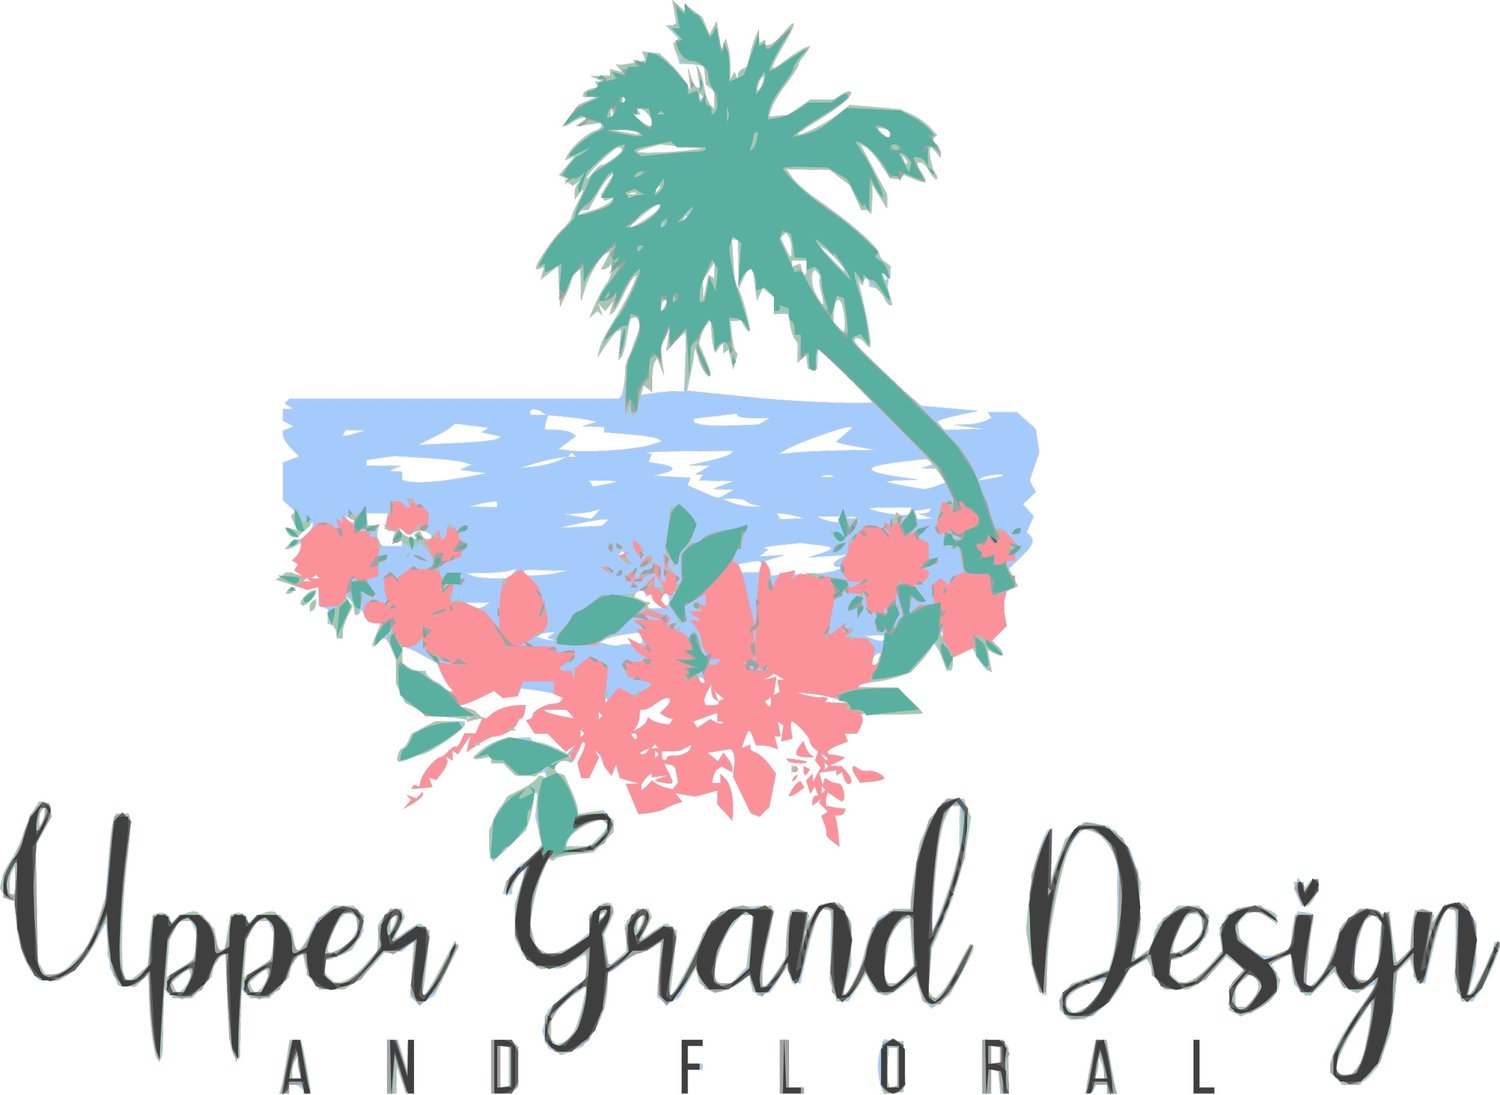 Upper Grand Design and Floral